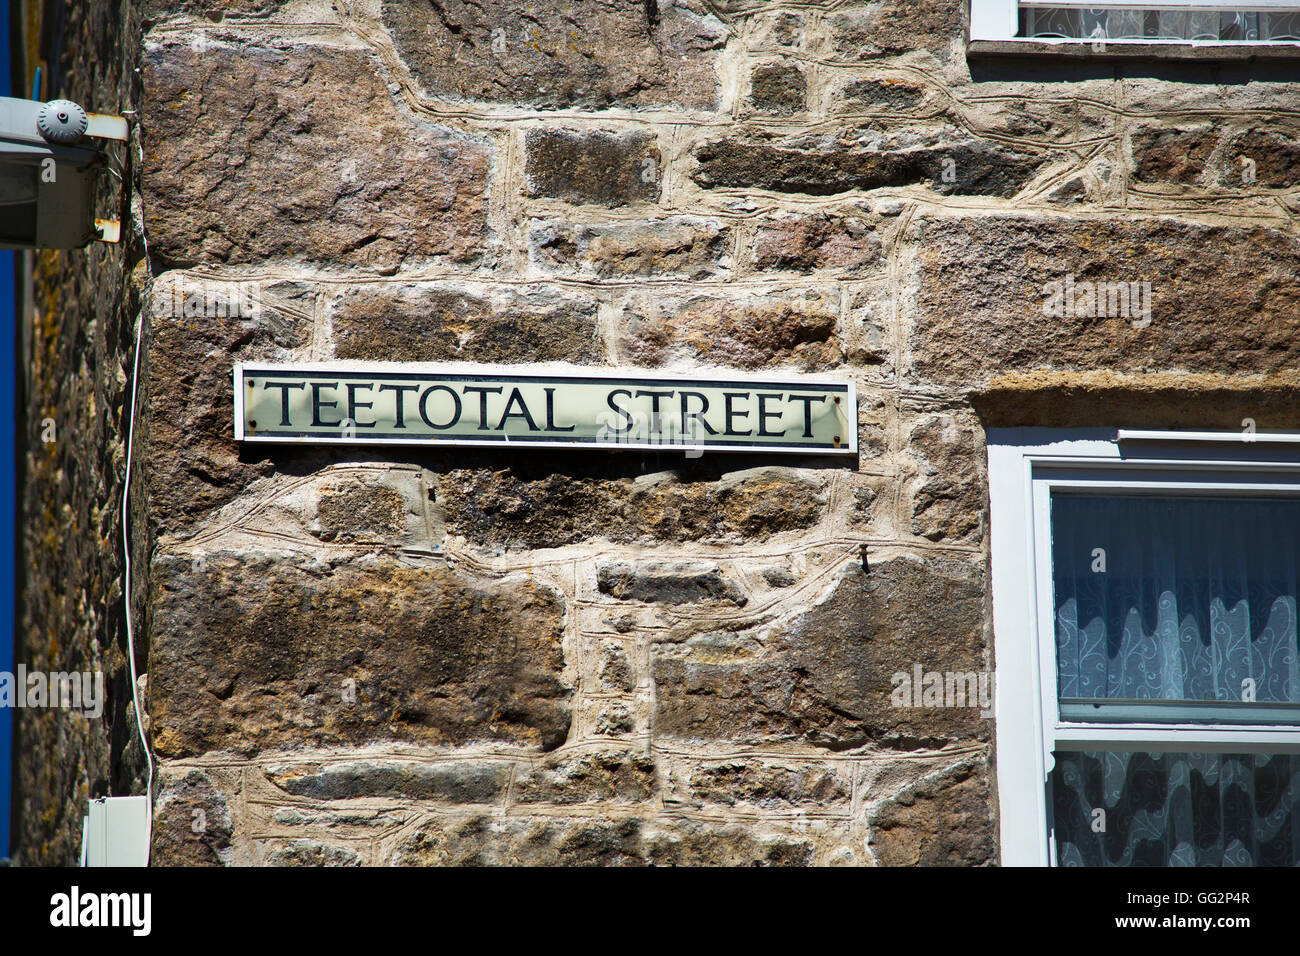 Teetotal street in st Ives Cornwall,England,UK Stock Photo